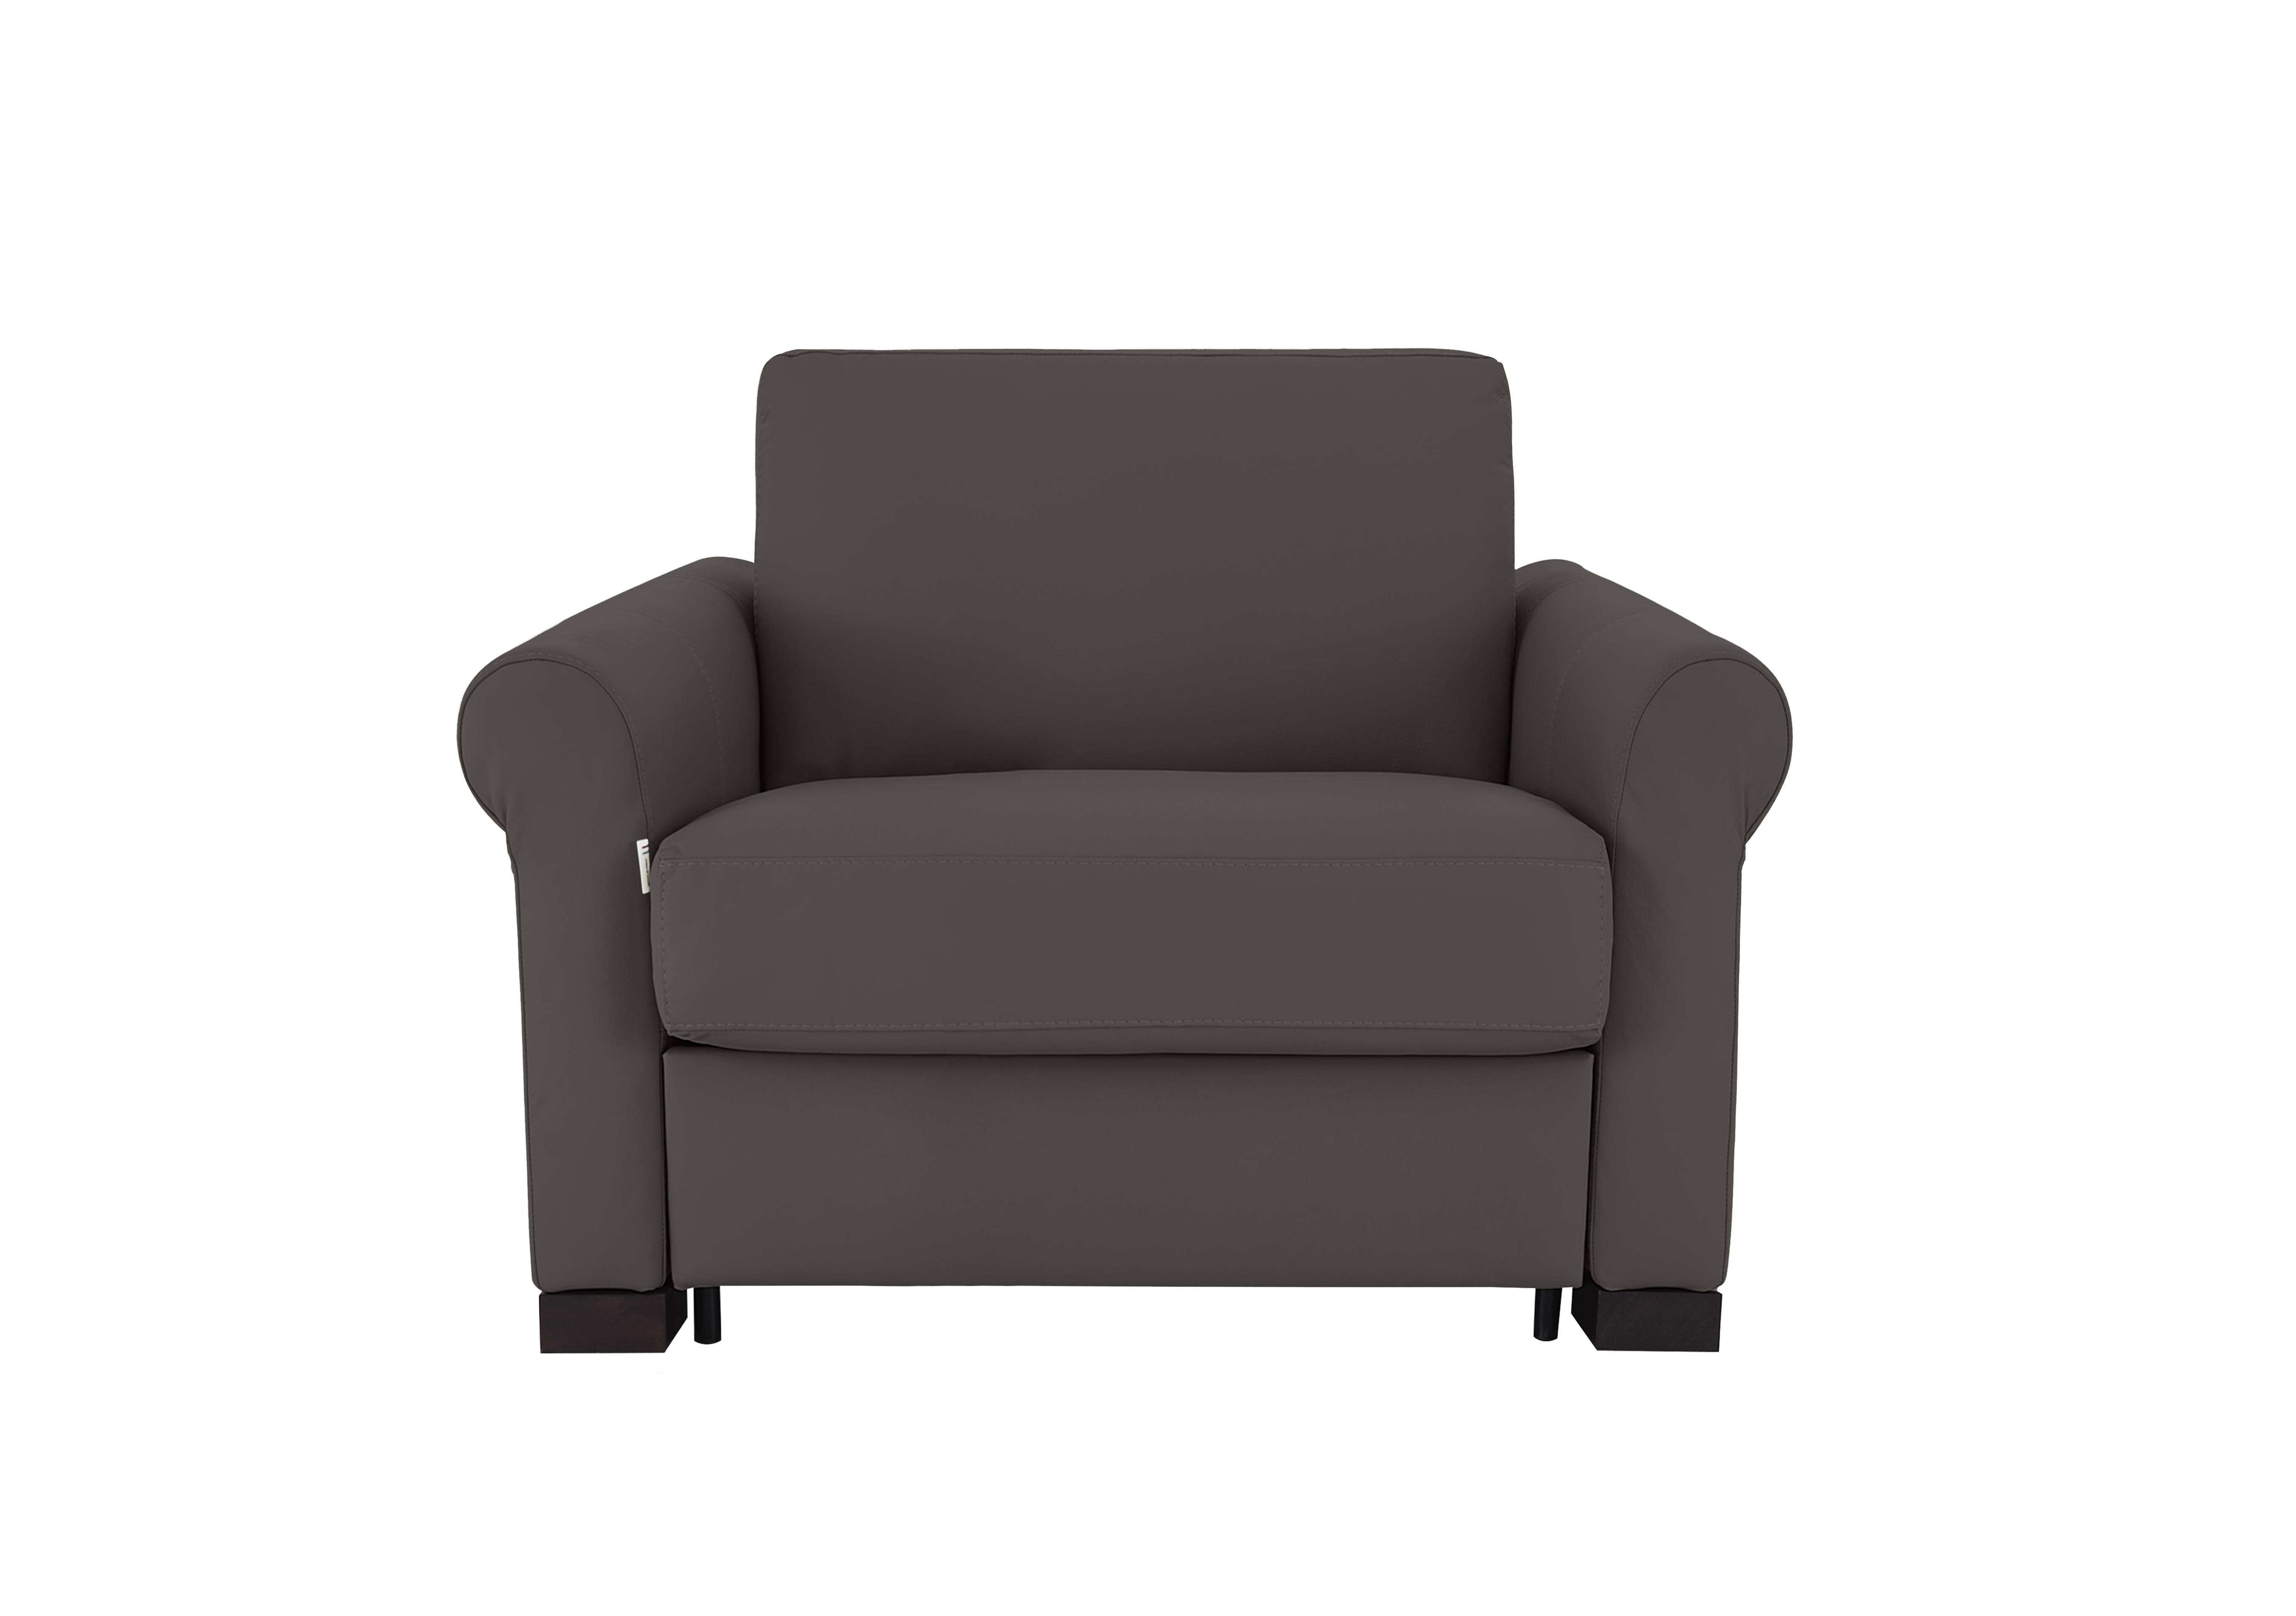 Alcova Leather Chair Sofa Bed with Scroll Arms in Torello Grigio Scuro 327 on Furniture Village